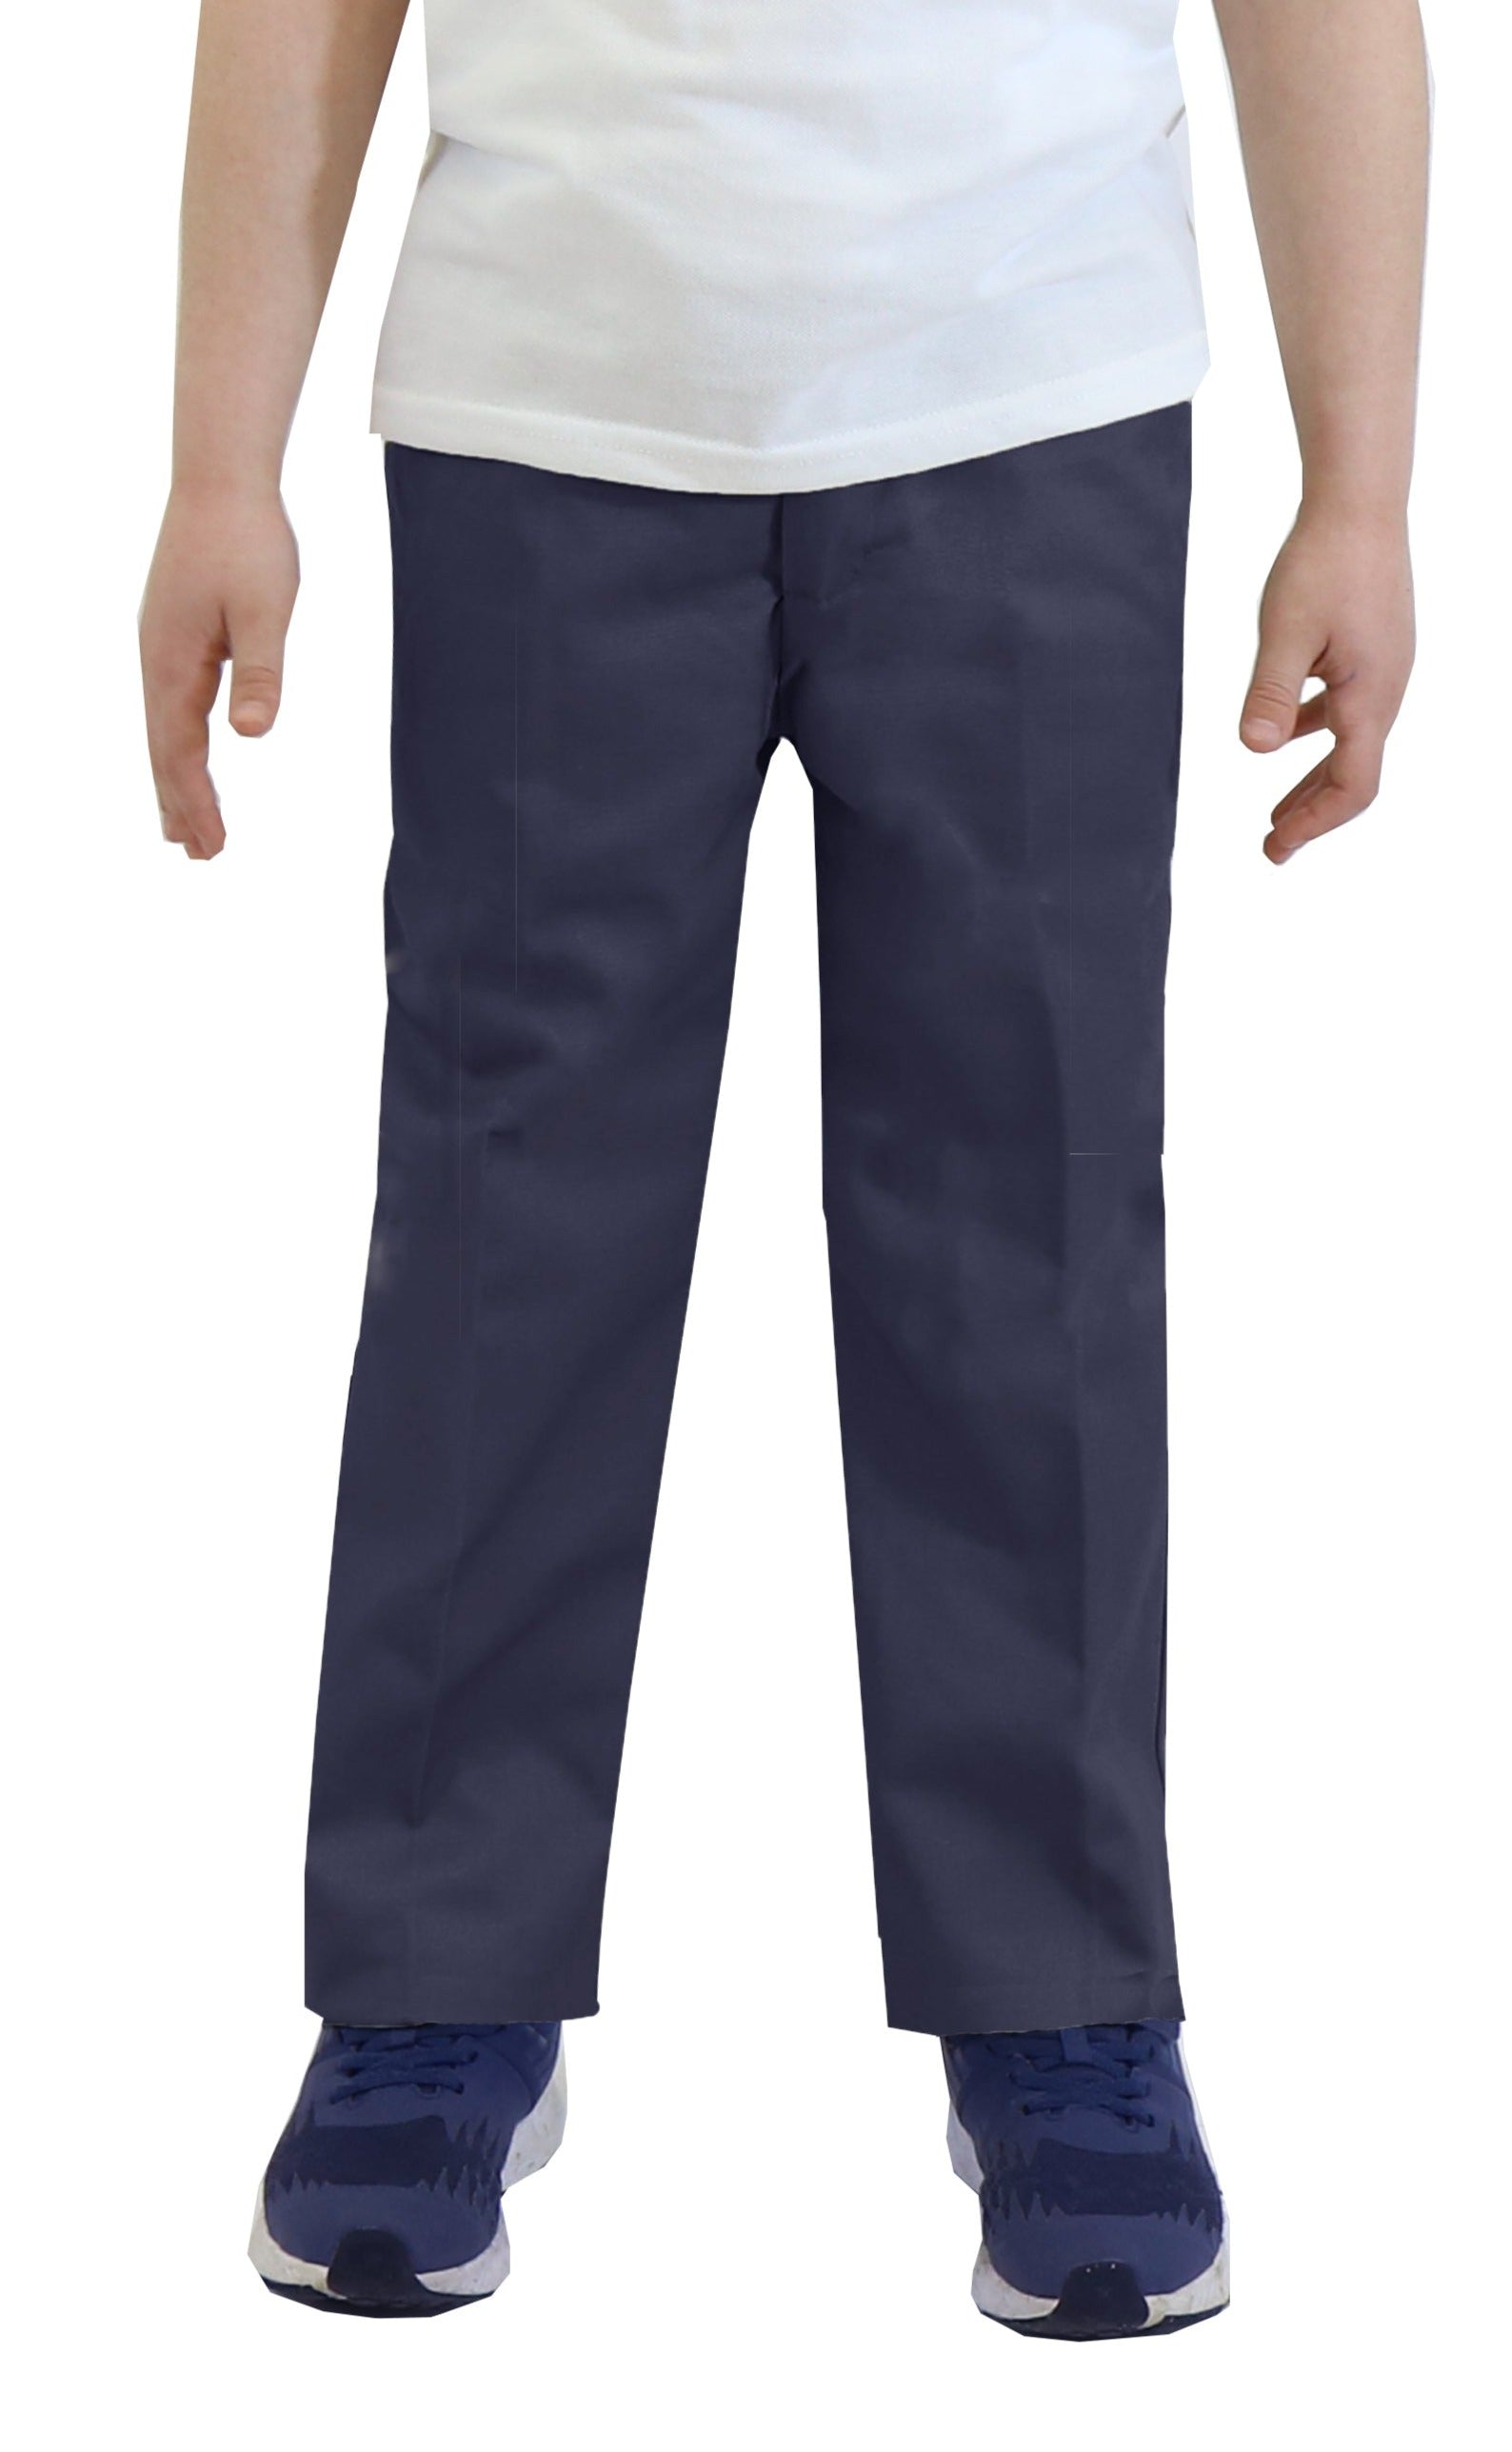 Buy AUW UNIVERSAL Flat Front Pants for Boy's | All Uniform Wear